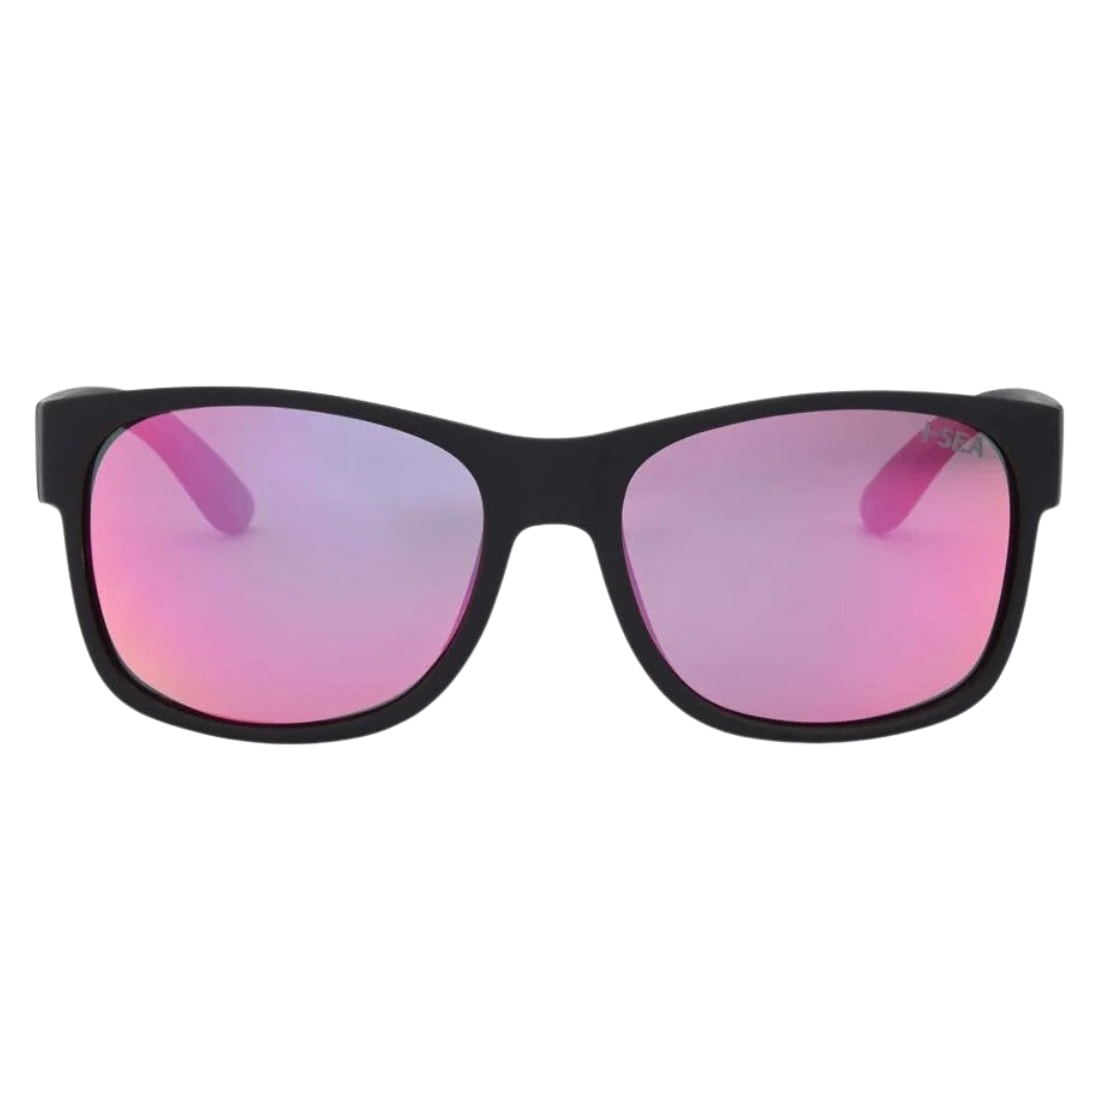 I-Sea Seven Seas Polarised Sunglasses - Black Rubber/Purple Mirror Polarized Lens - Square/Rectangular Sunglasses by I-Sea